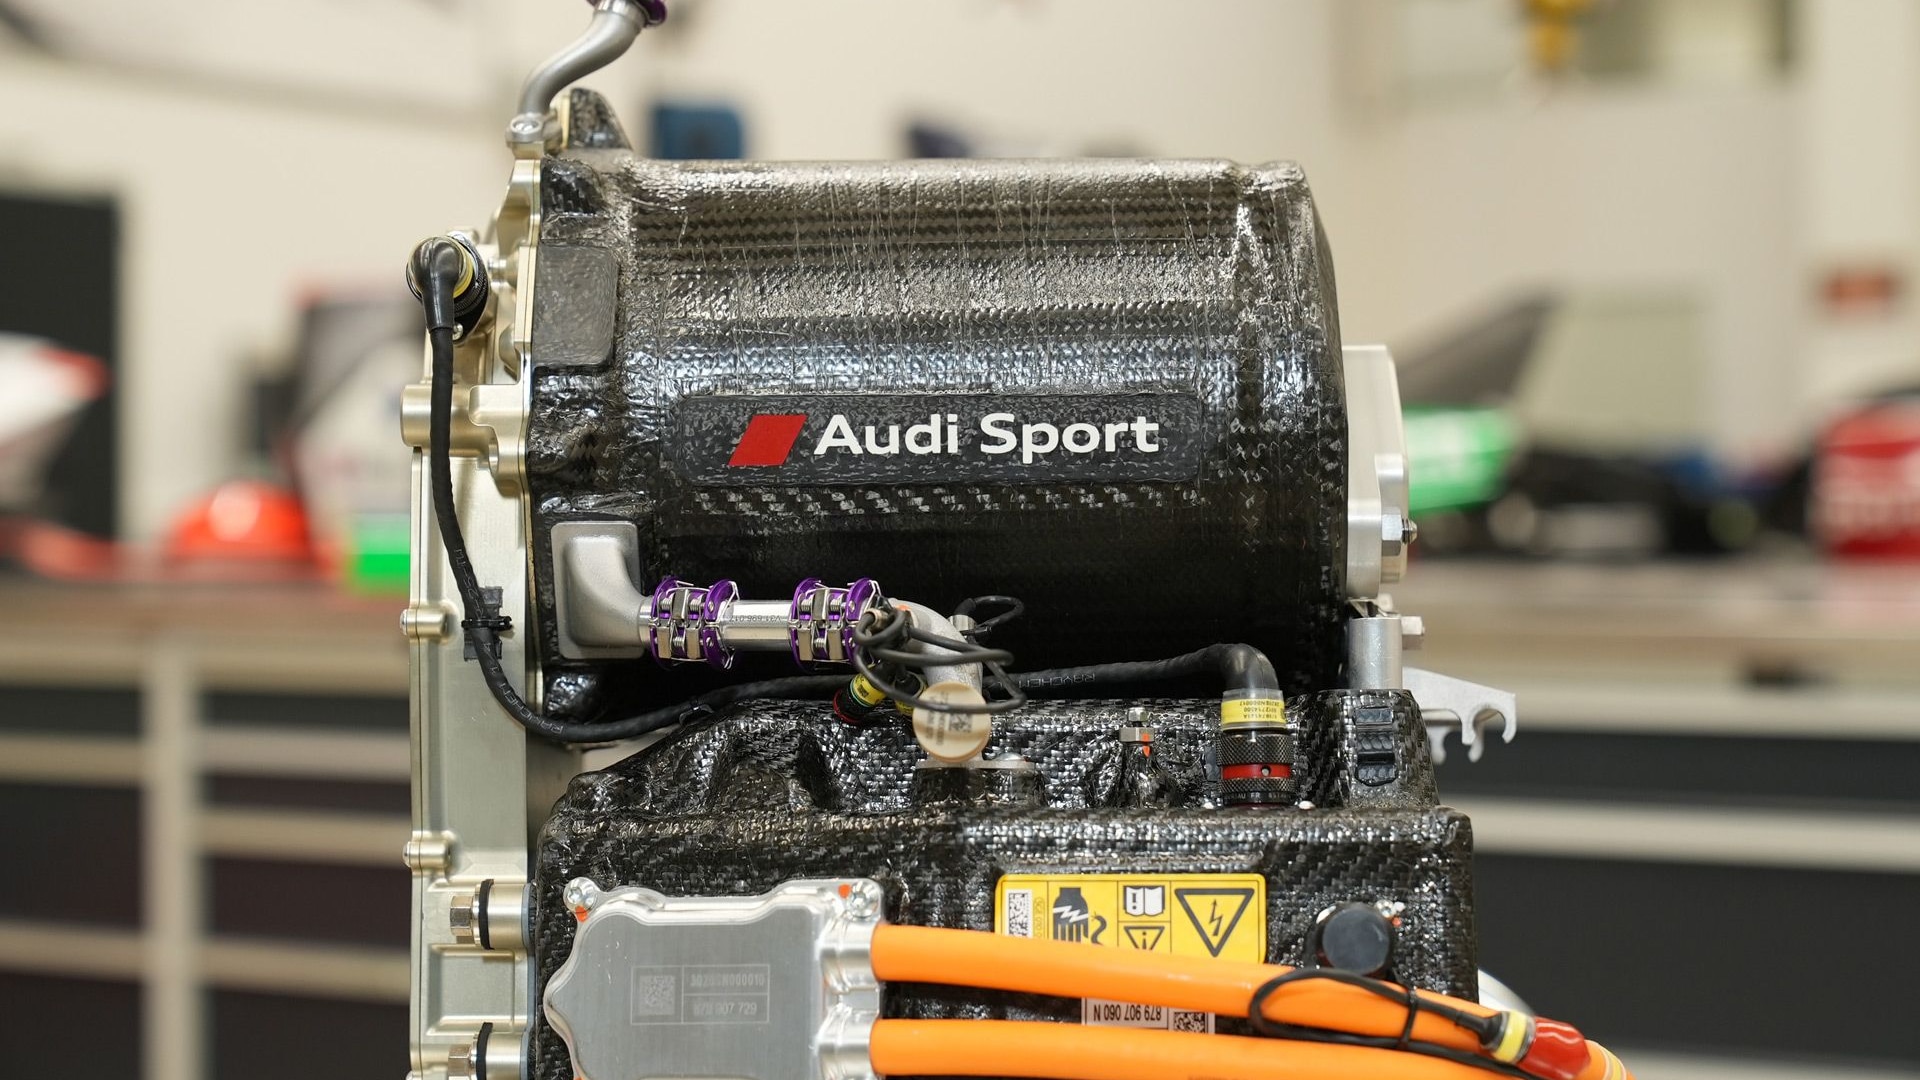 2020/2021 Audi E-Tron FE07 Formula E race car